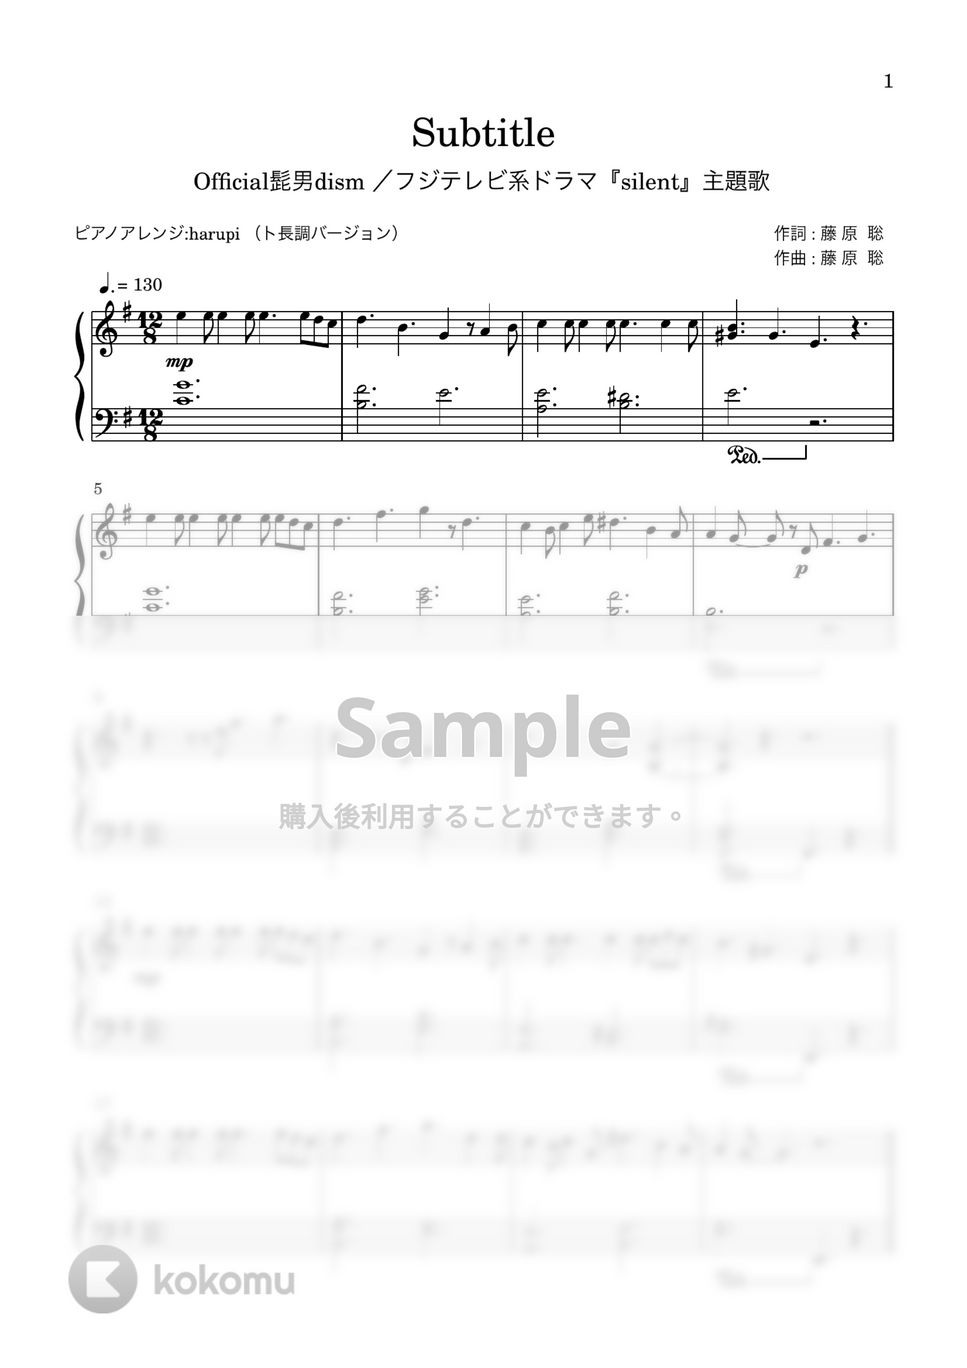 Official髭男dism - Subtitle (ピアノ/ソロ) by harupi